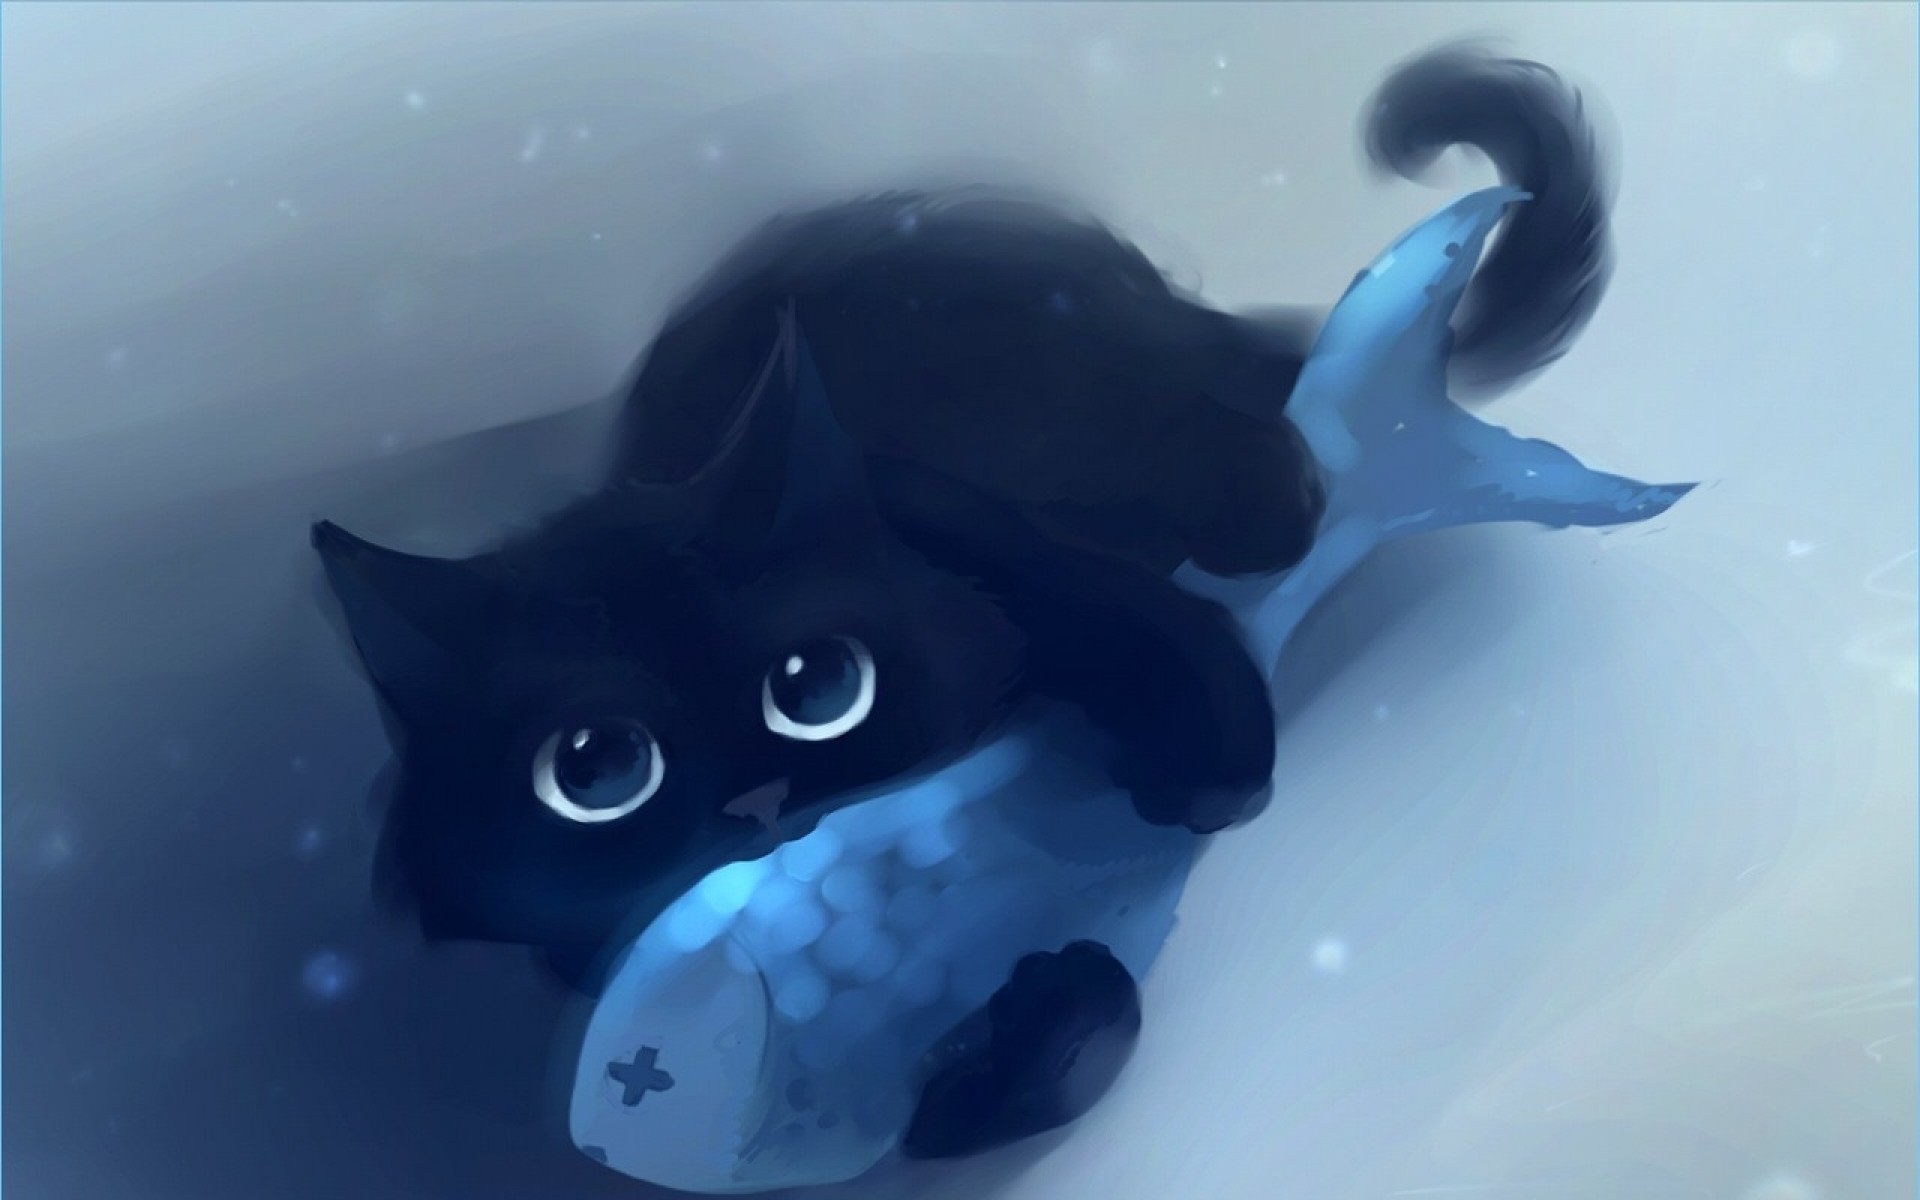 Cute Anime Cat Wallpaper 62 Images